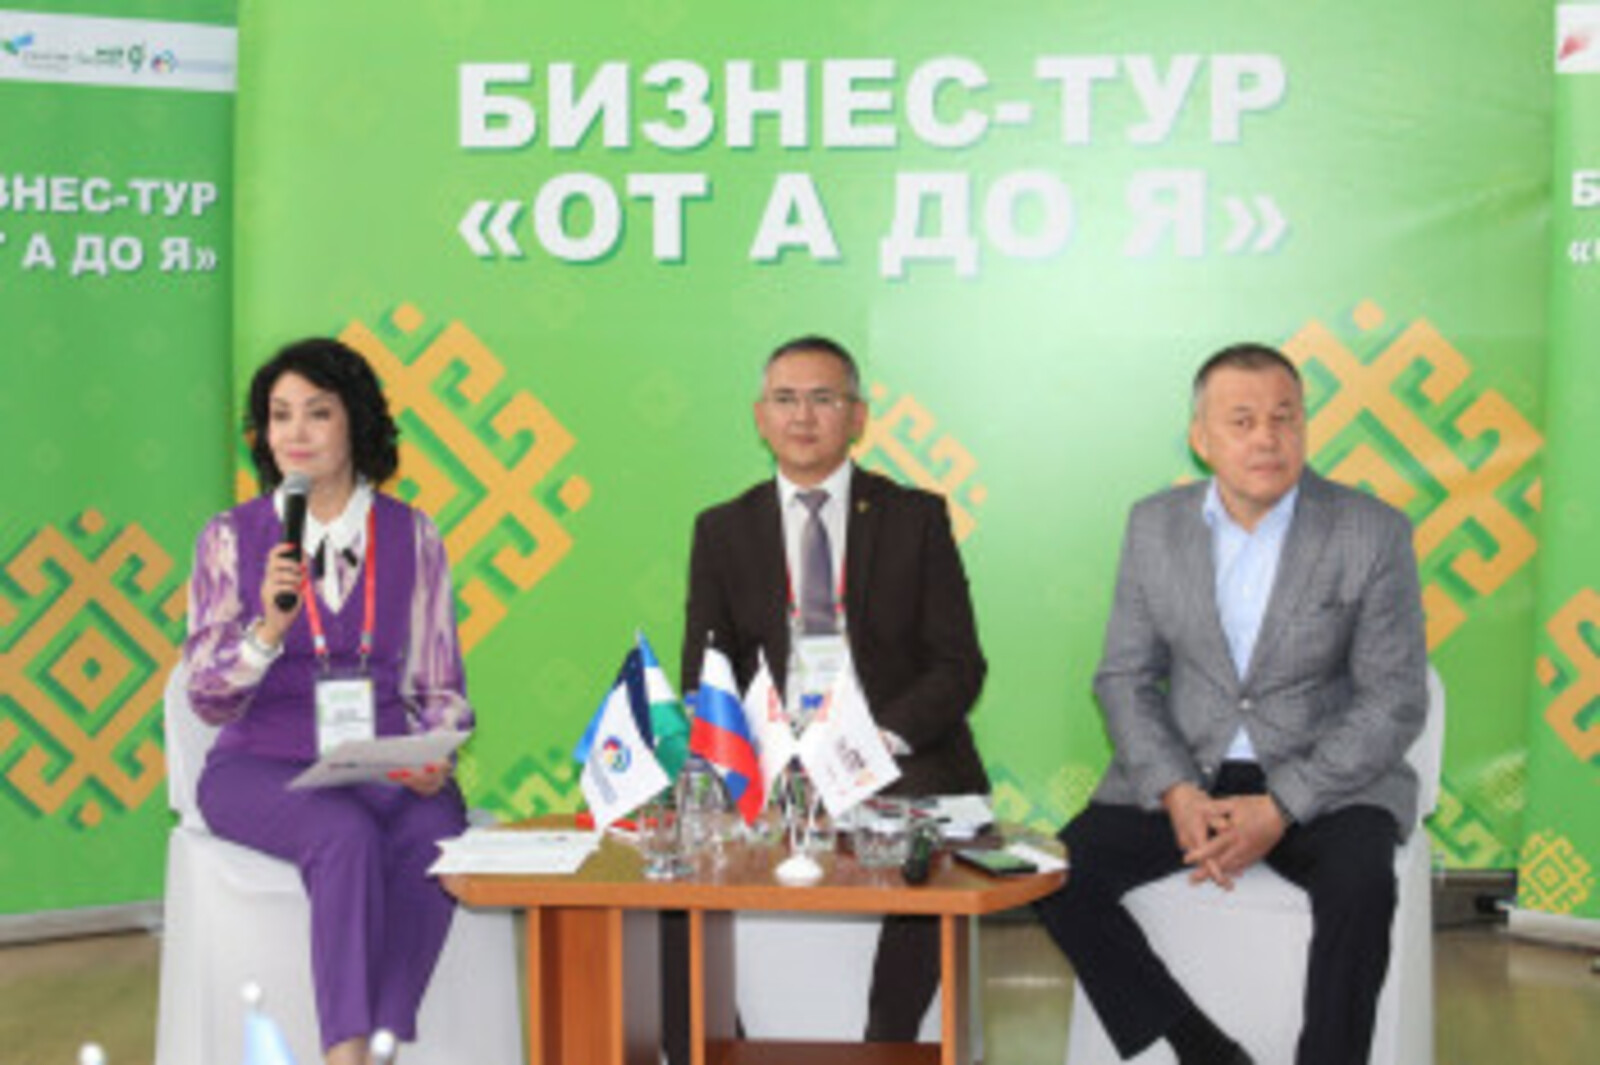 В Башкортостане завершился бизнес-тур «От А до Я»